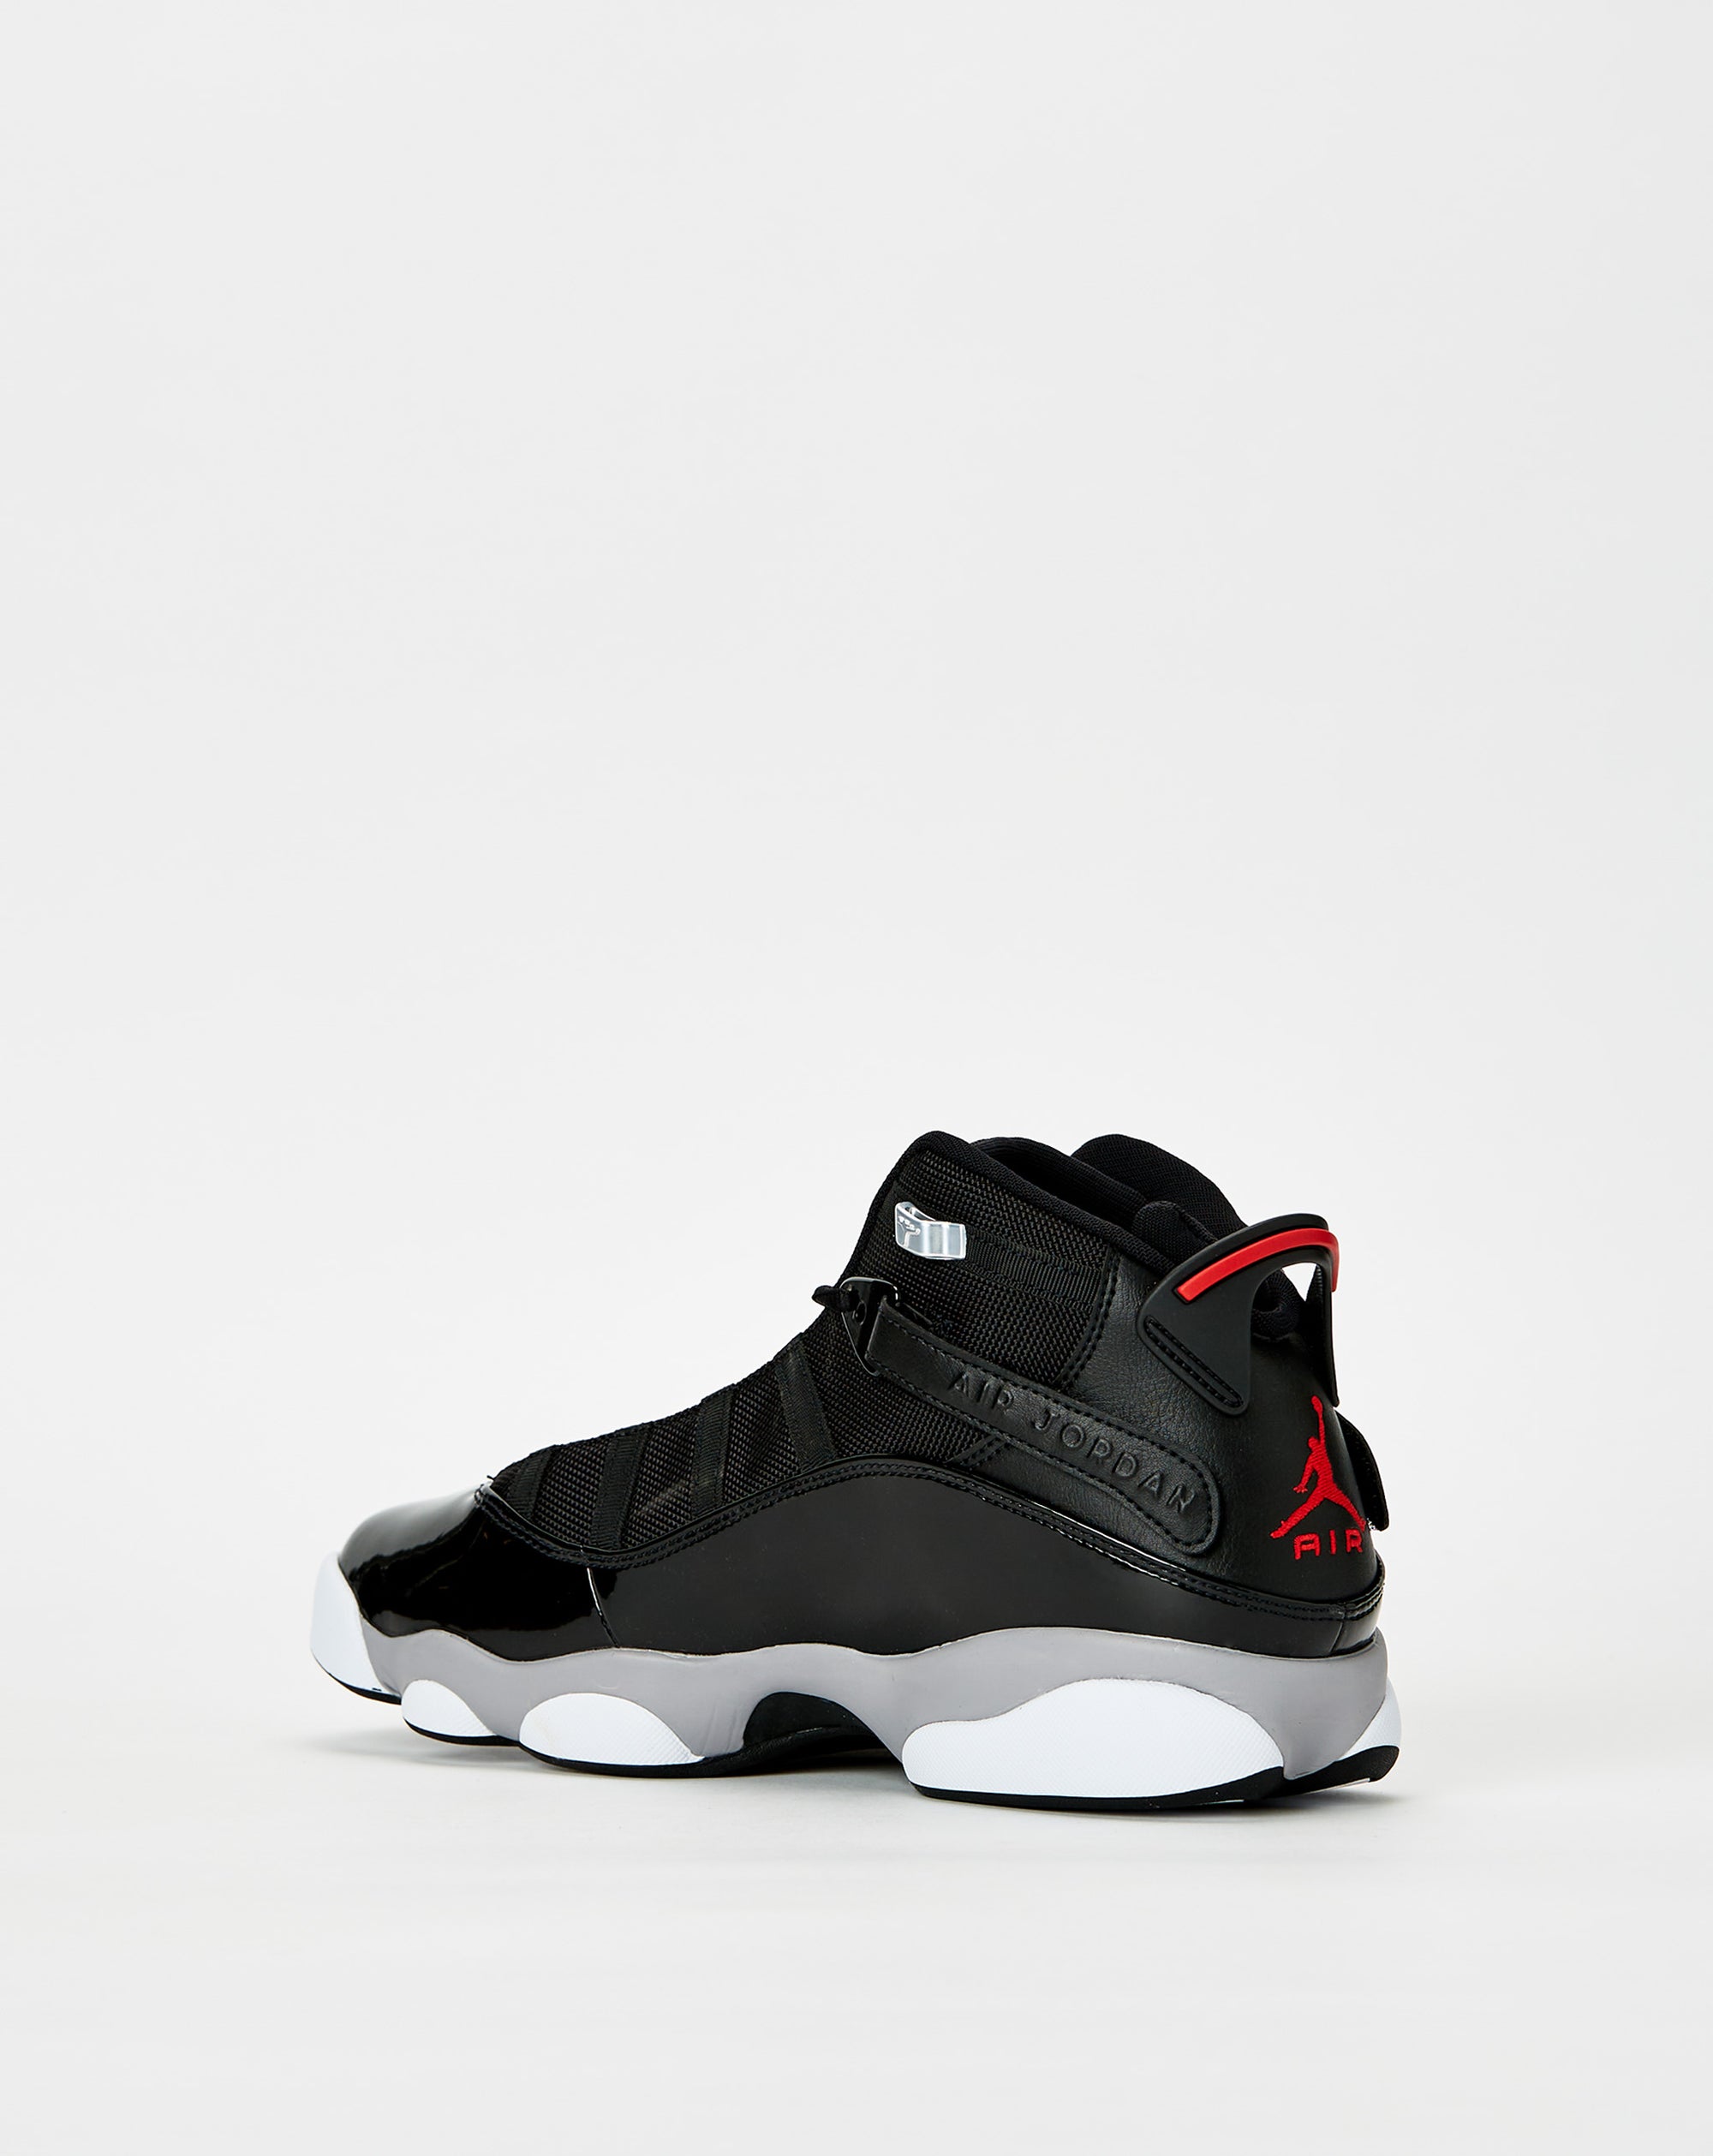 Air Jordan Jordan 6 Rings - Rule of Next Footwear